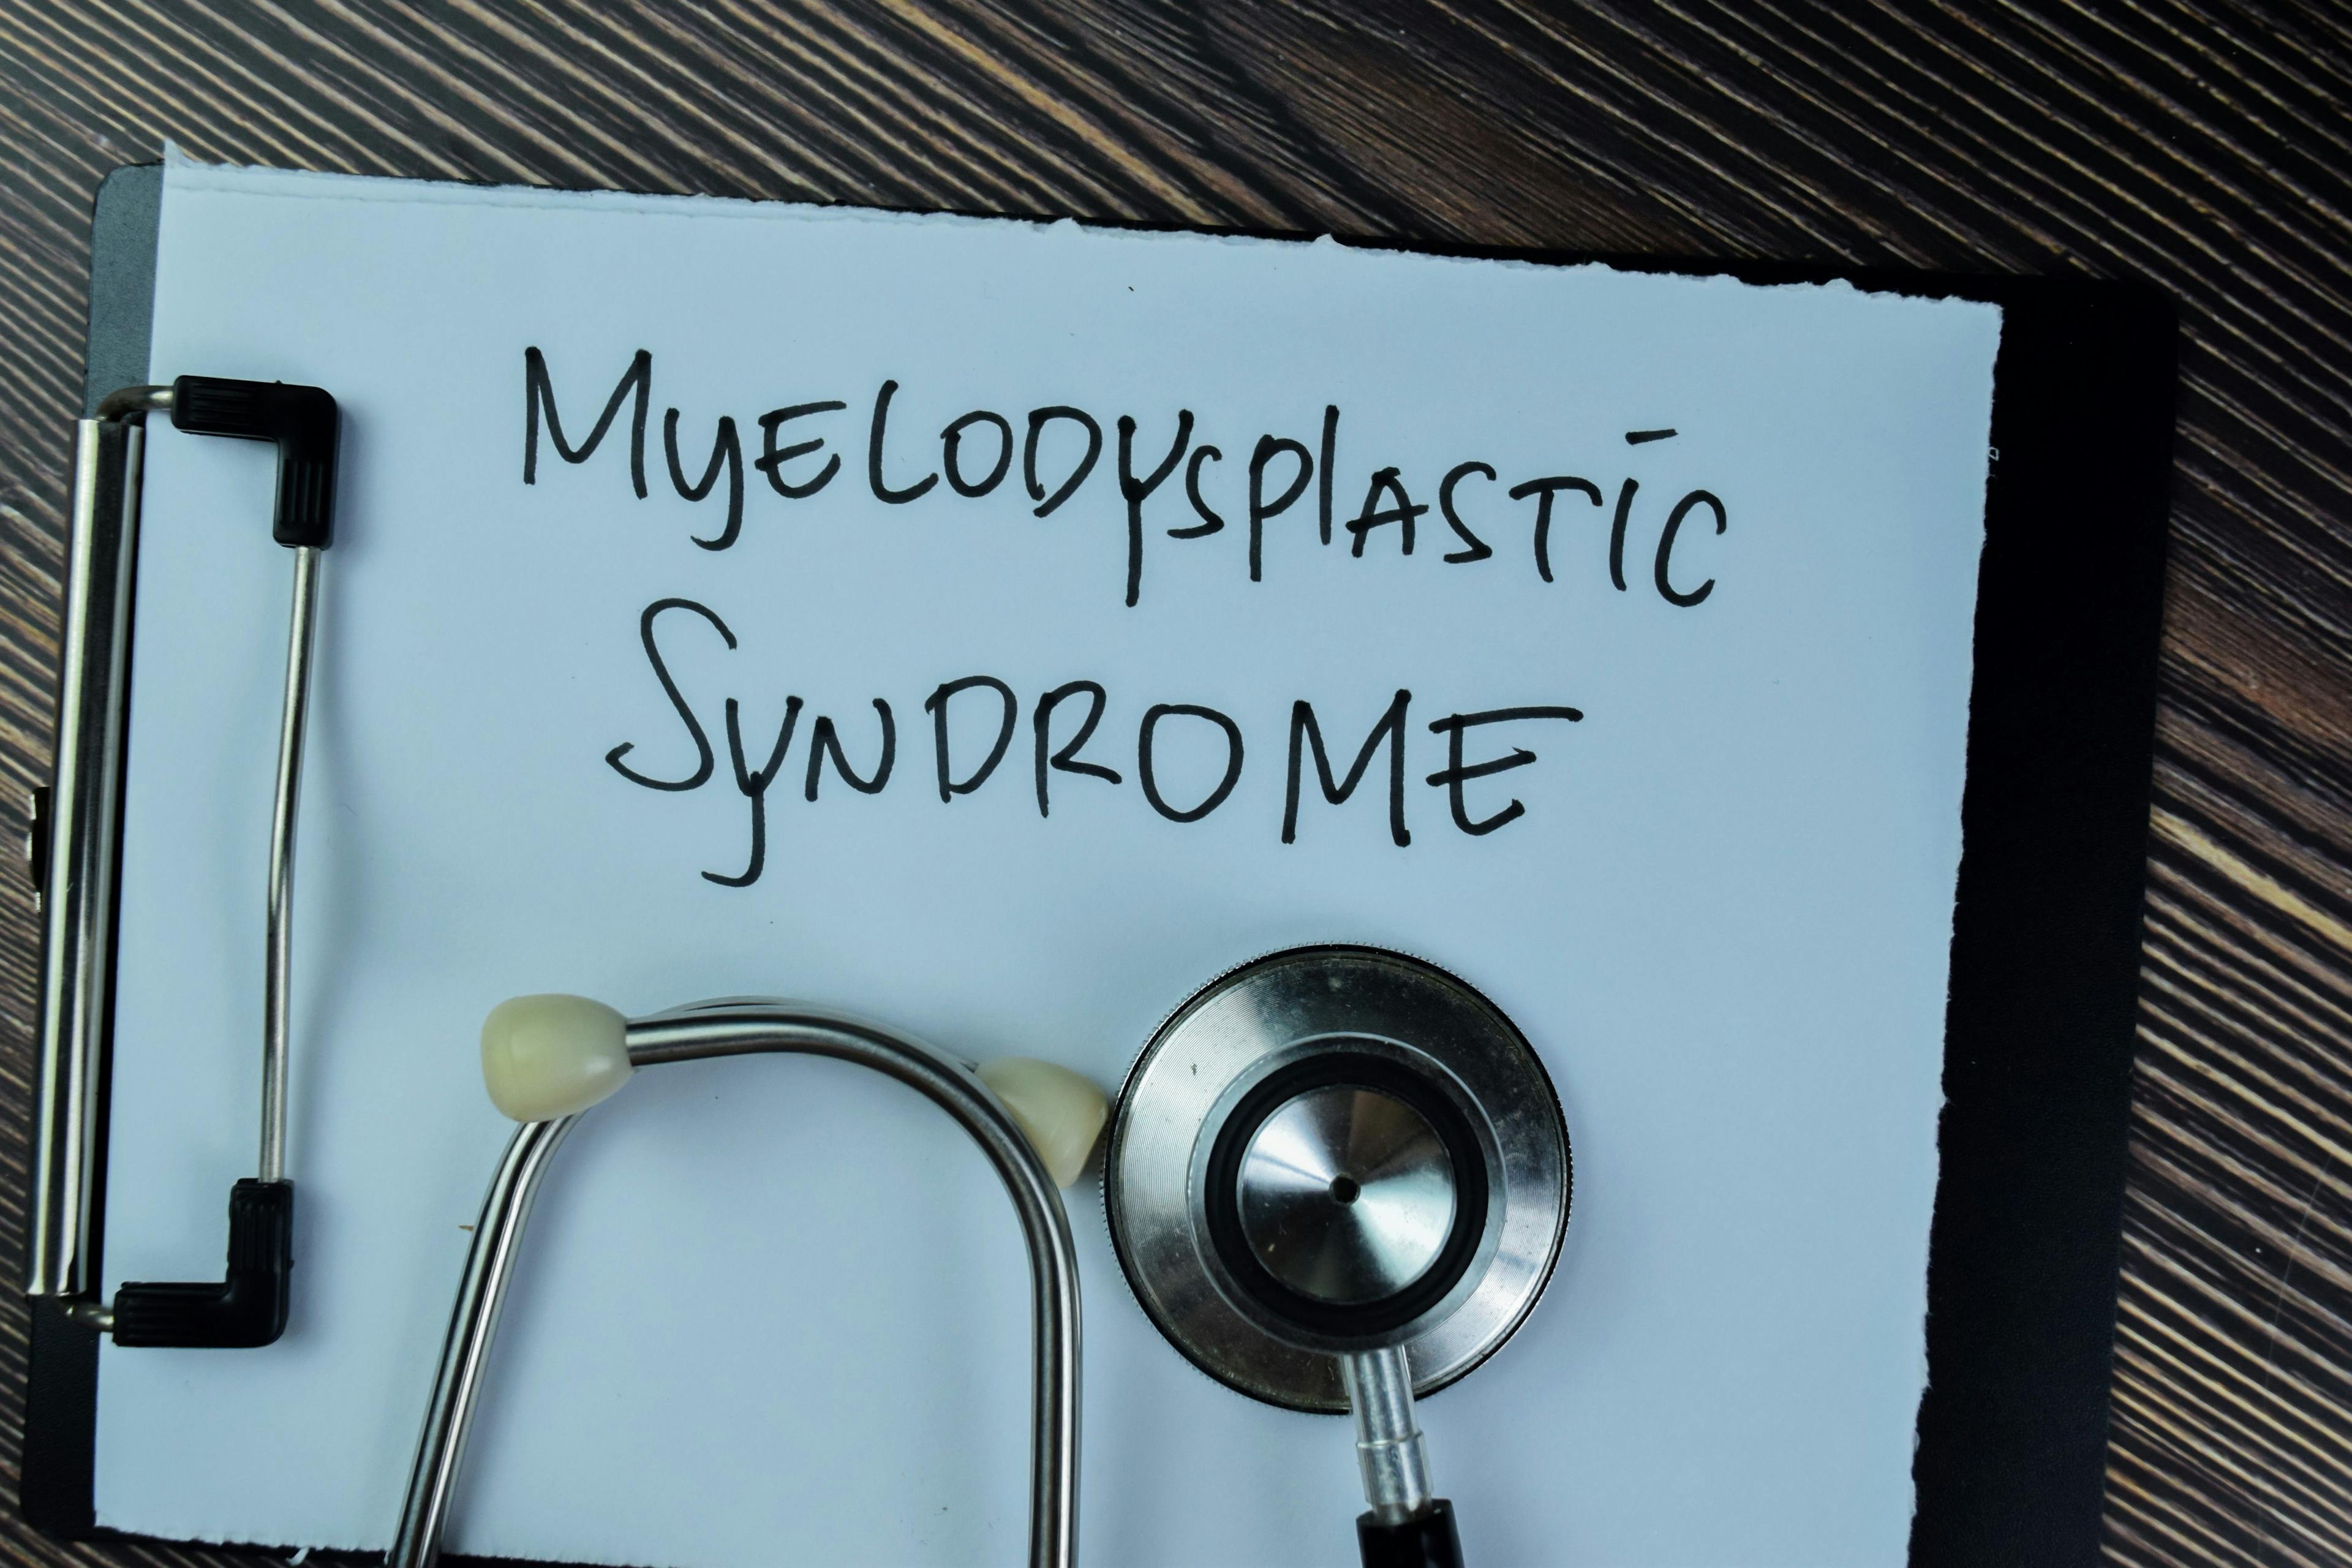 Concept of Meylodysplastic Syndrome | Image Credit: syahrir - stock.adobe.com